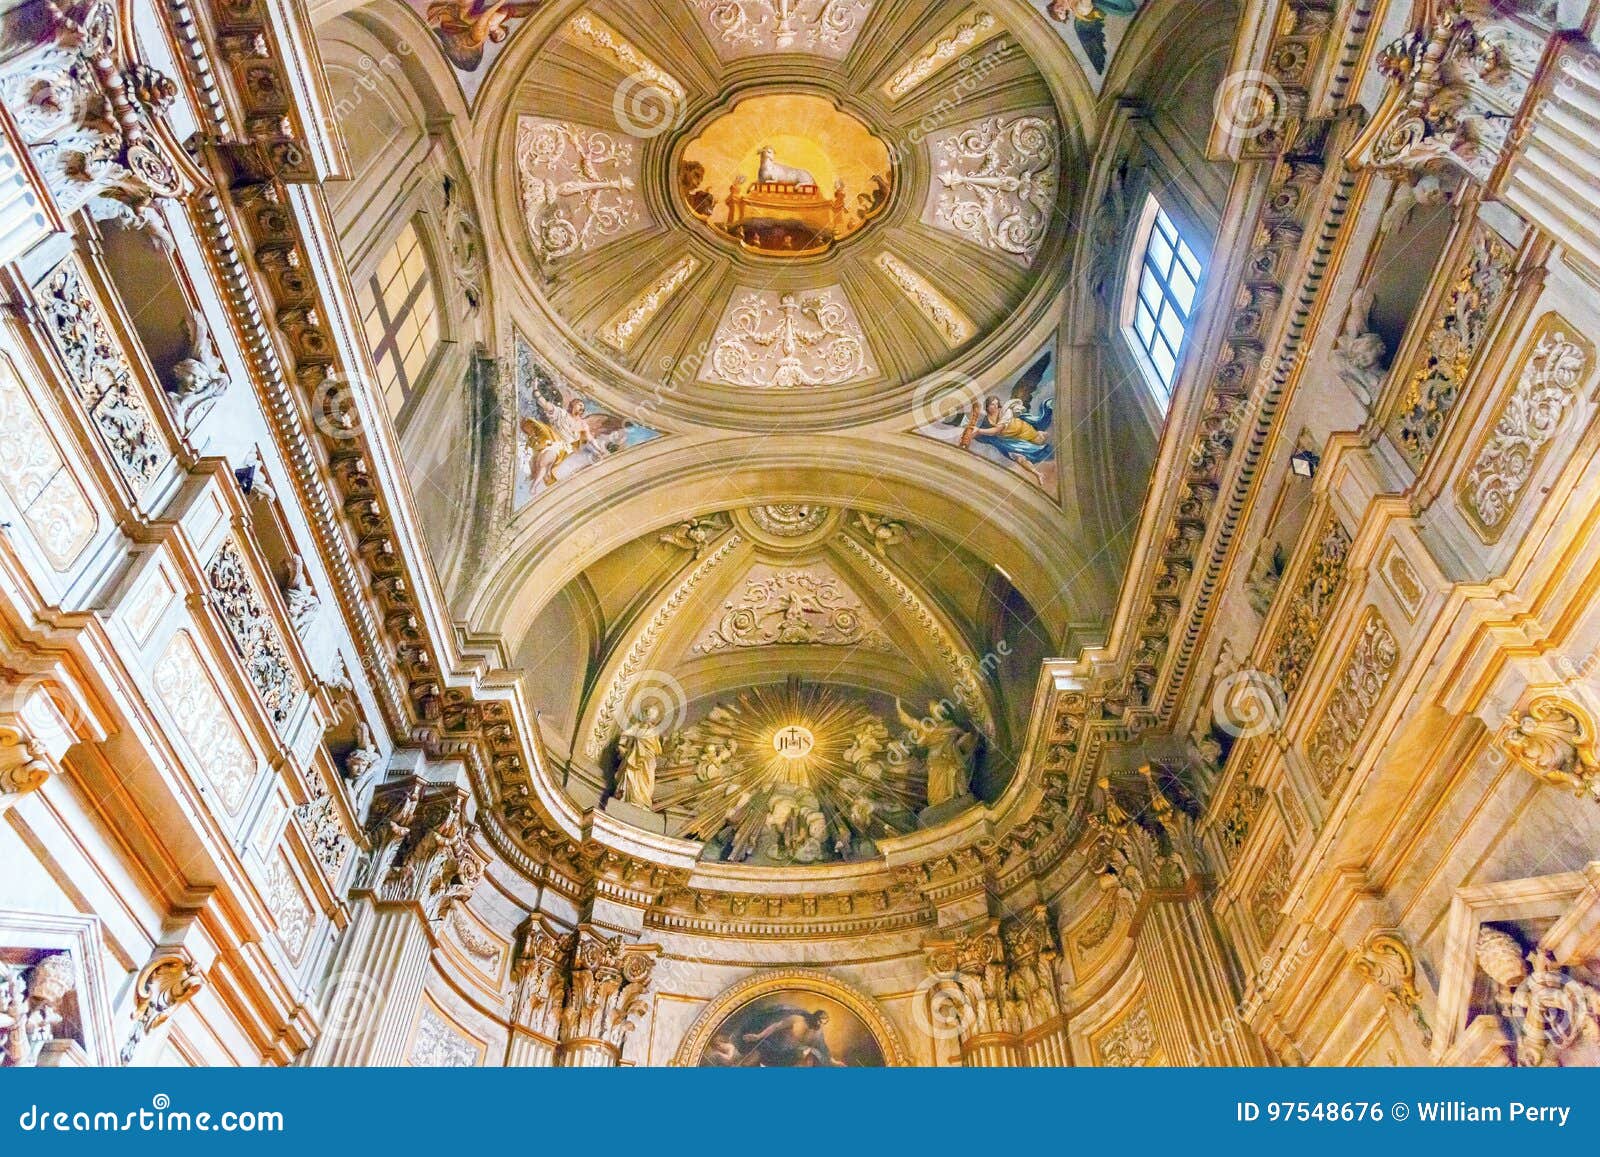 ceiling frescos vincenzo anastasio church rome italy